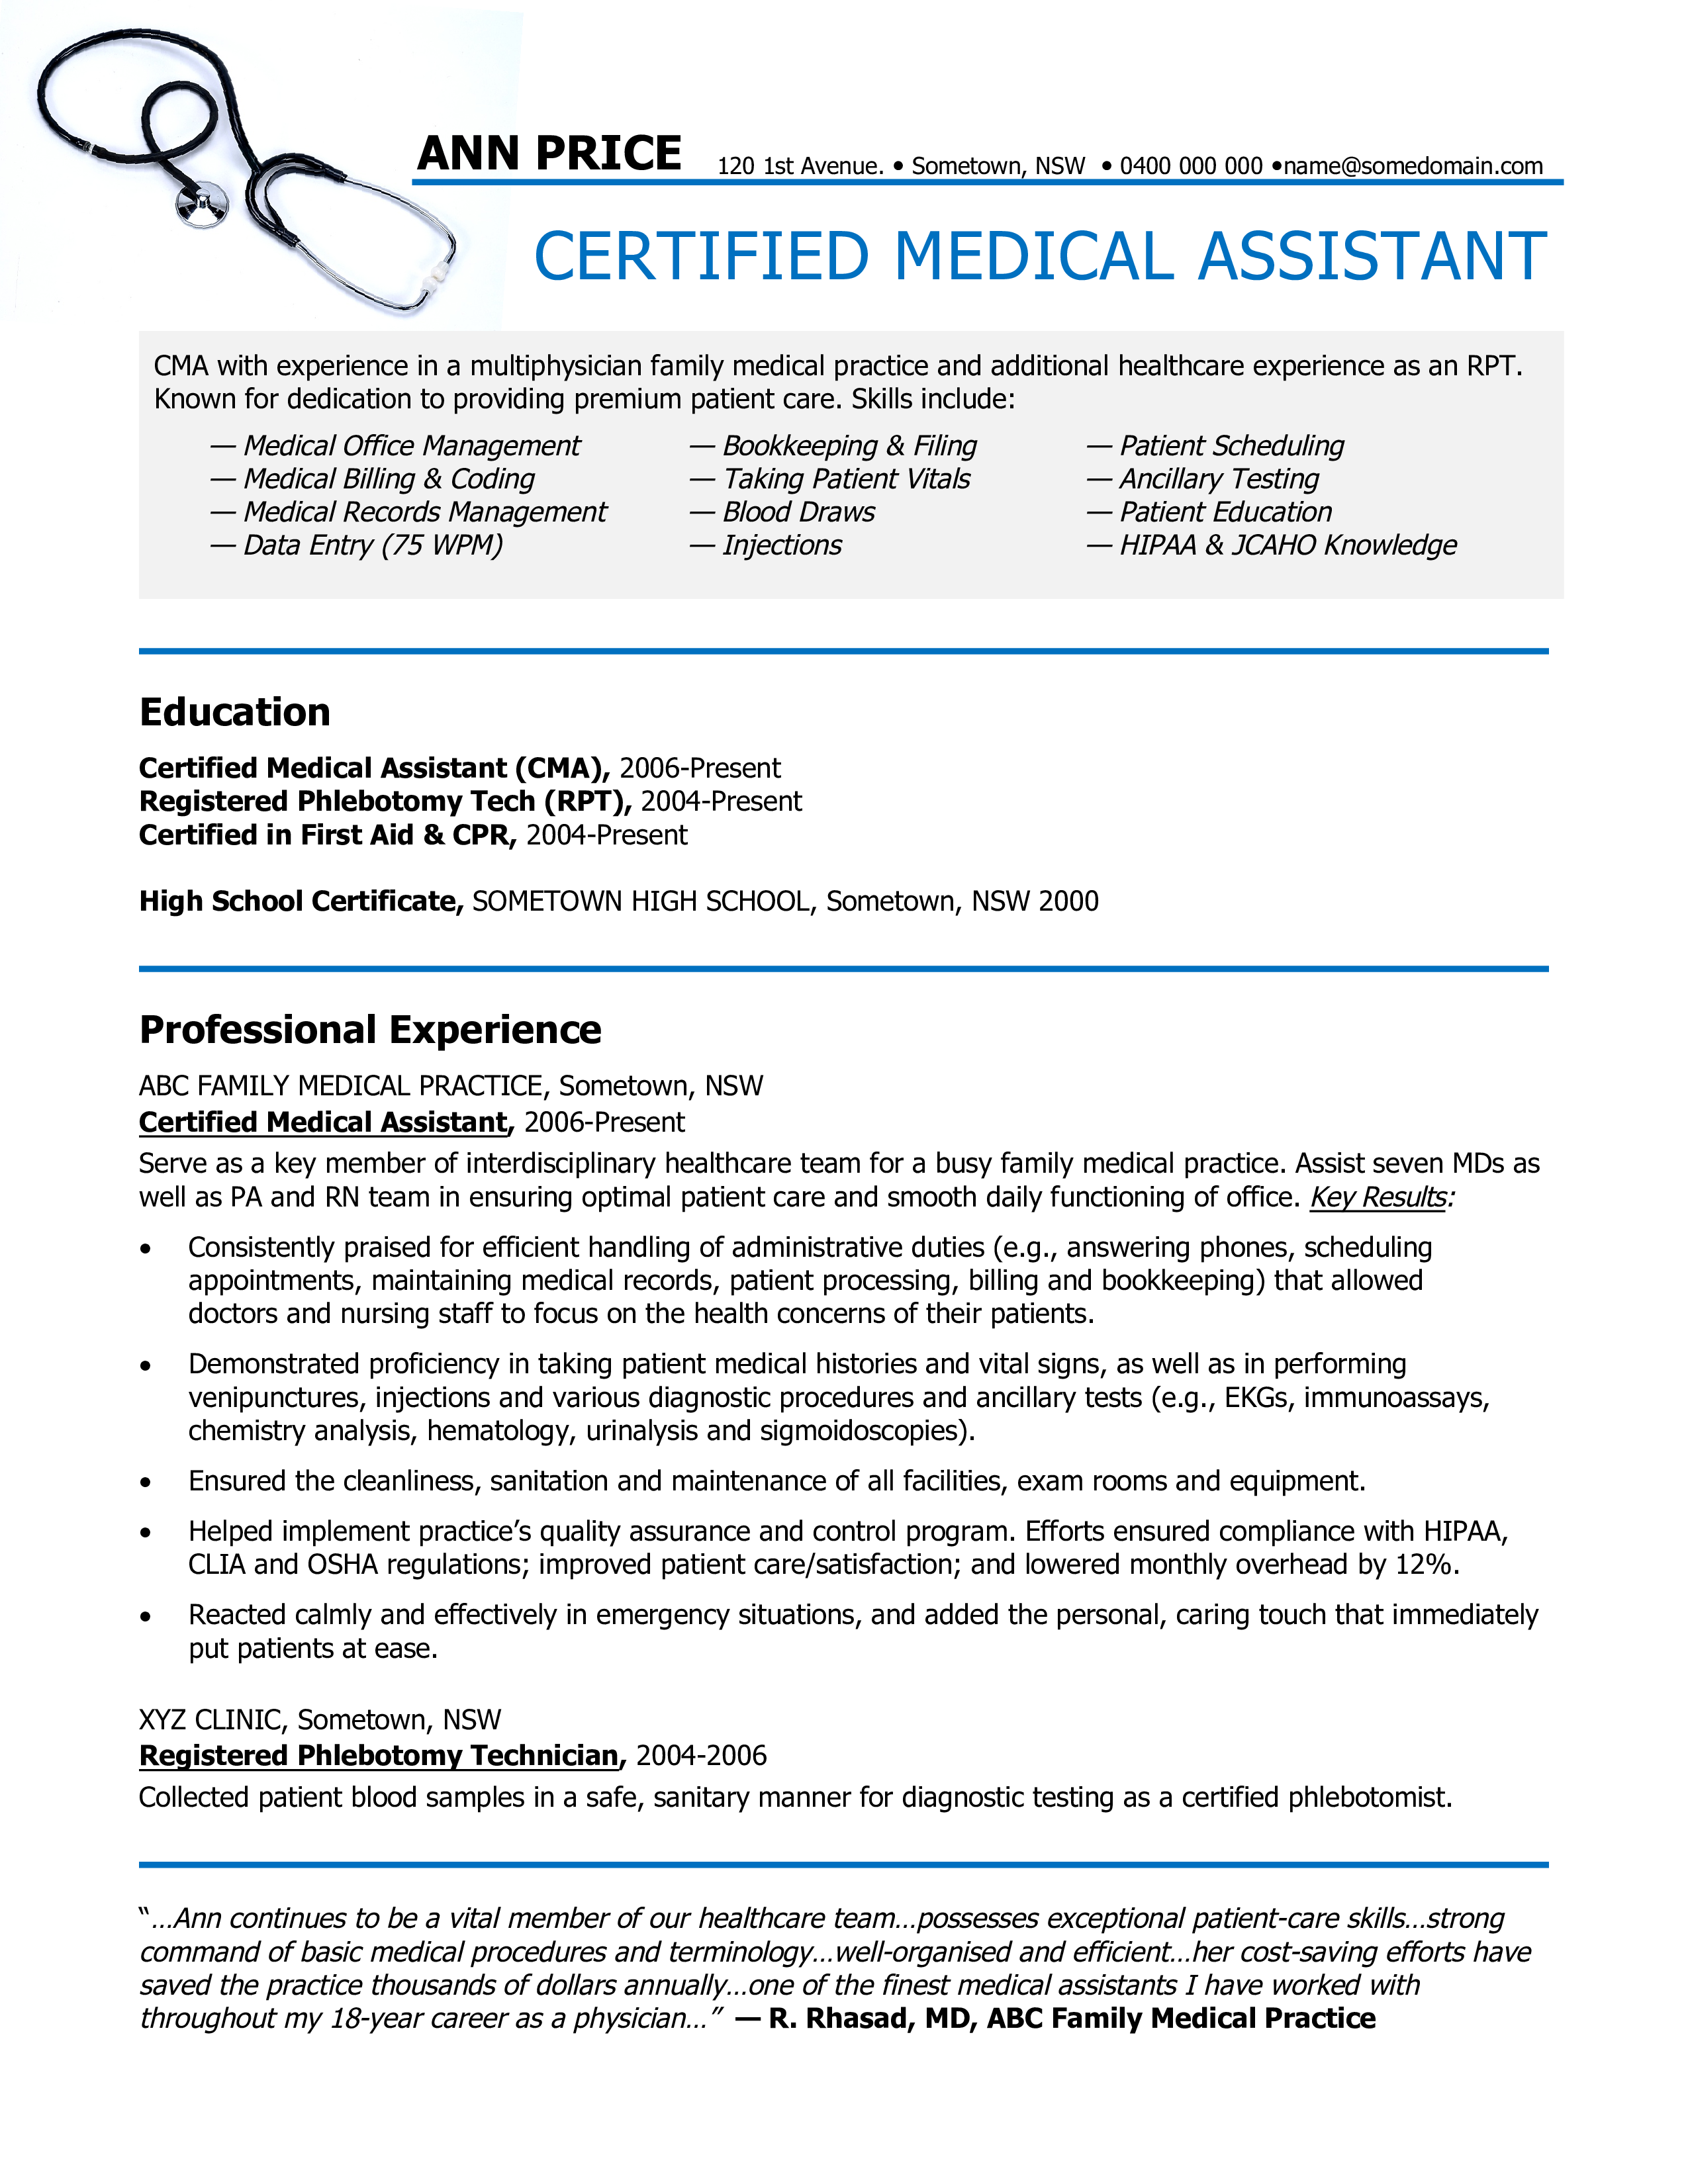 Certified Medical Assistant Resume Sample main image